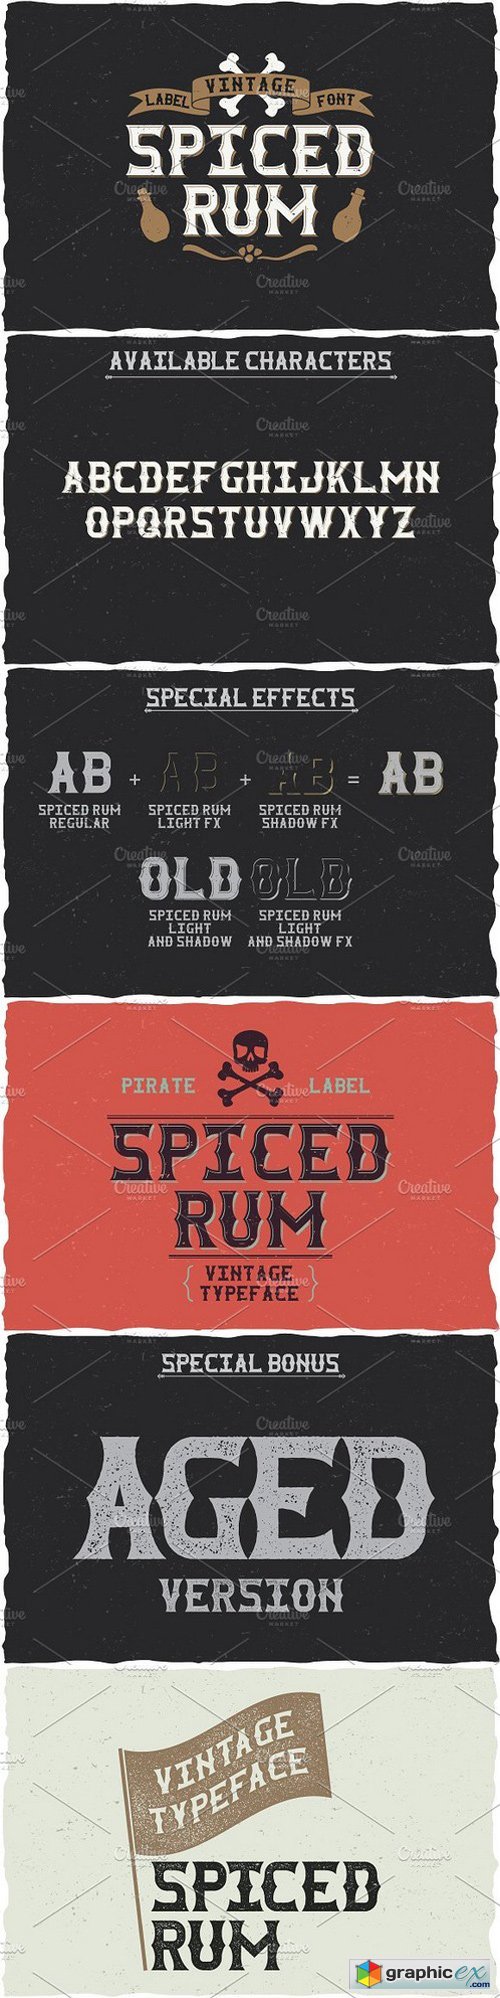 Spiced Rum Vintage Label Typeface